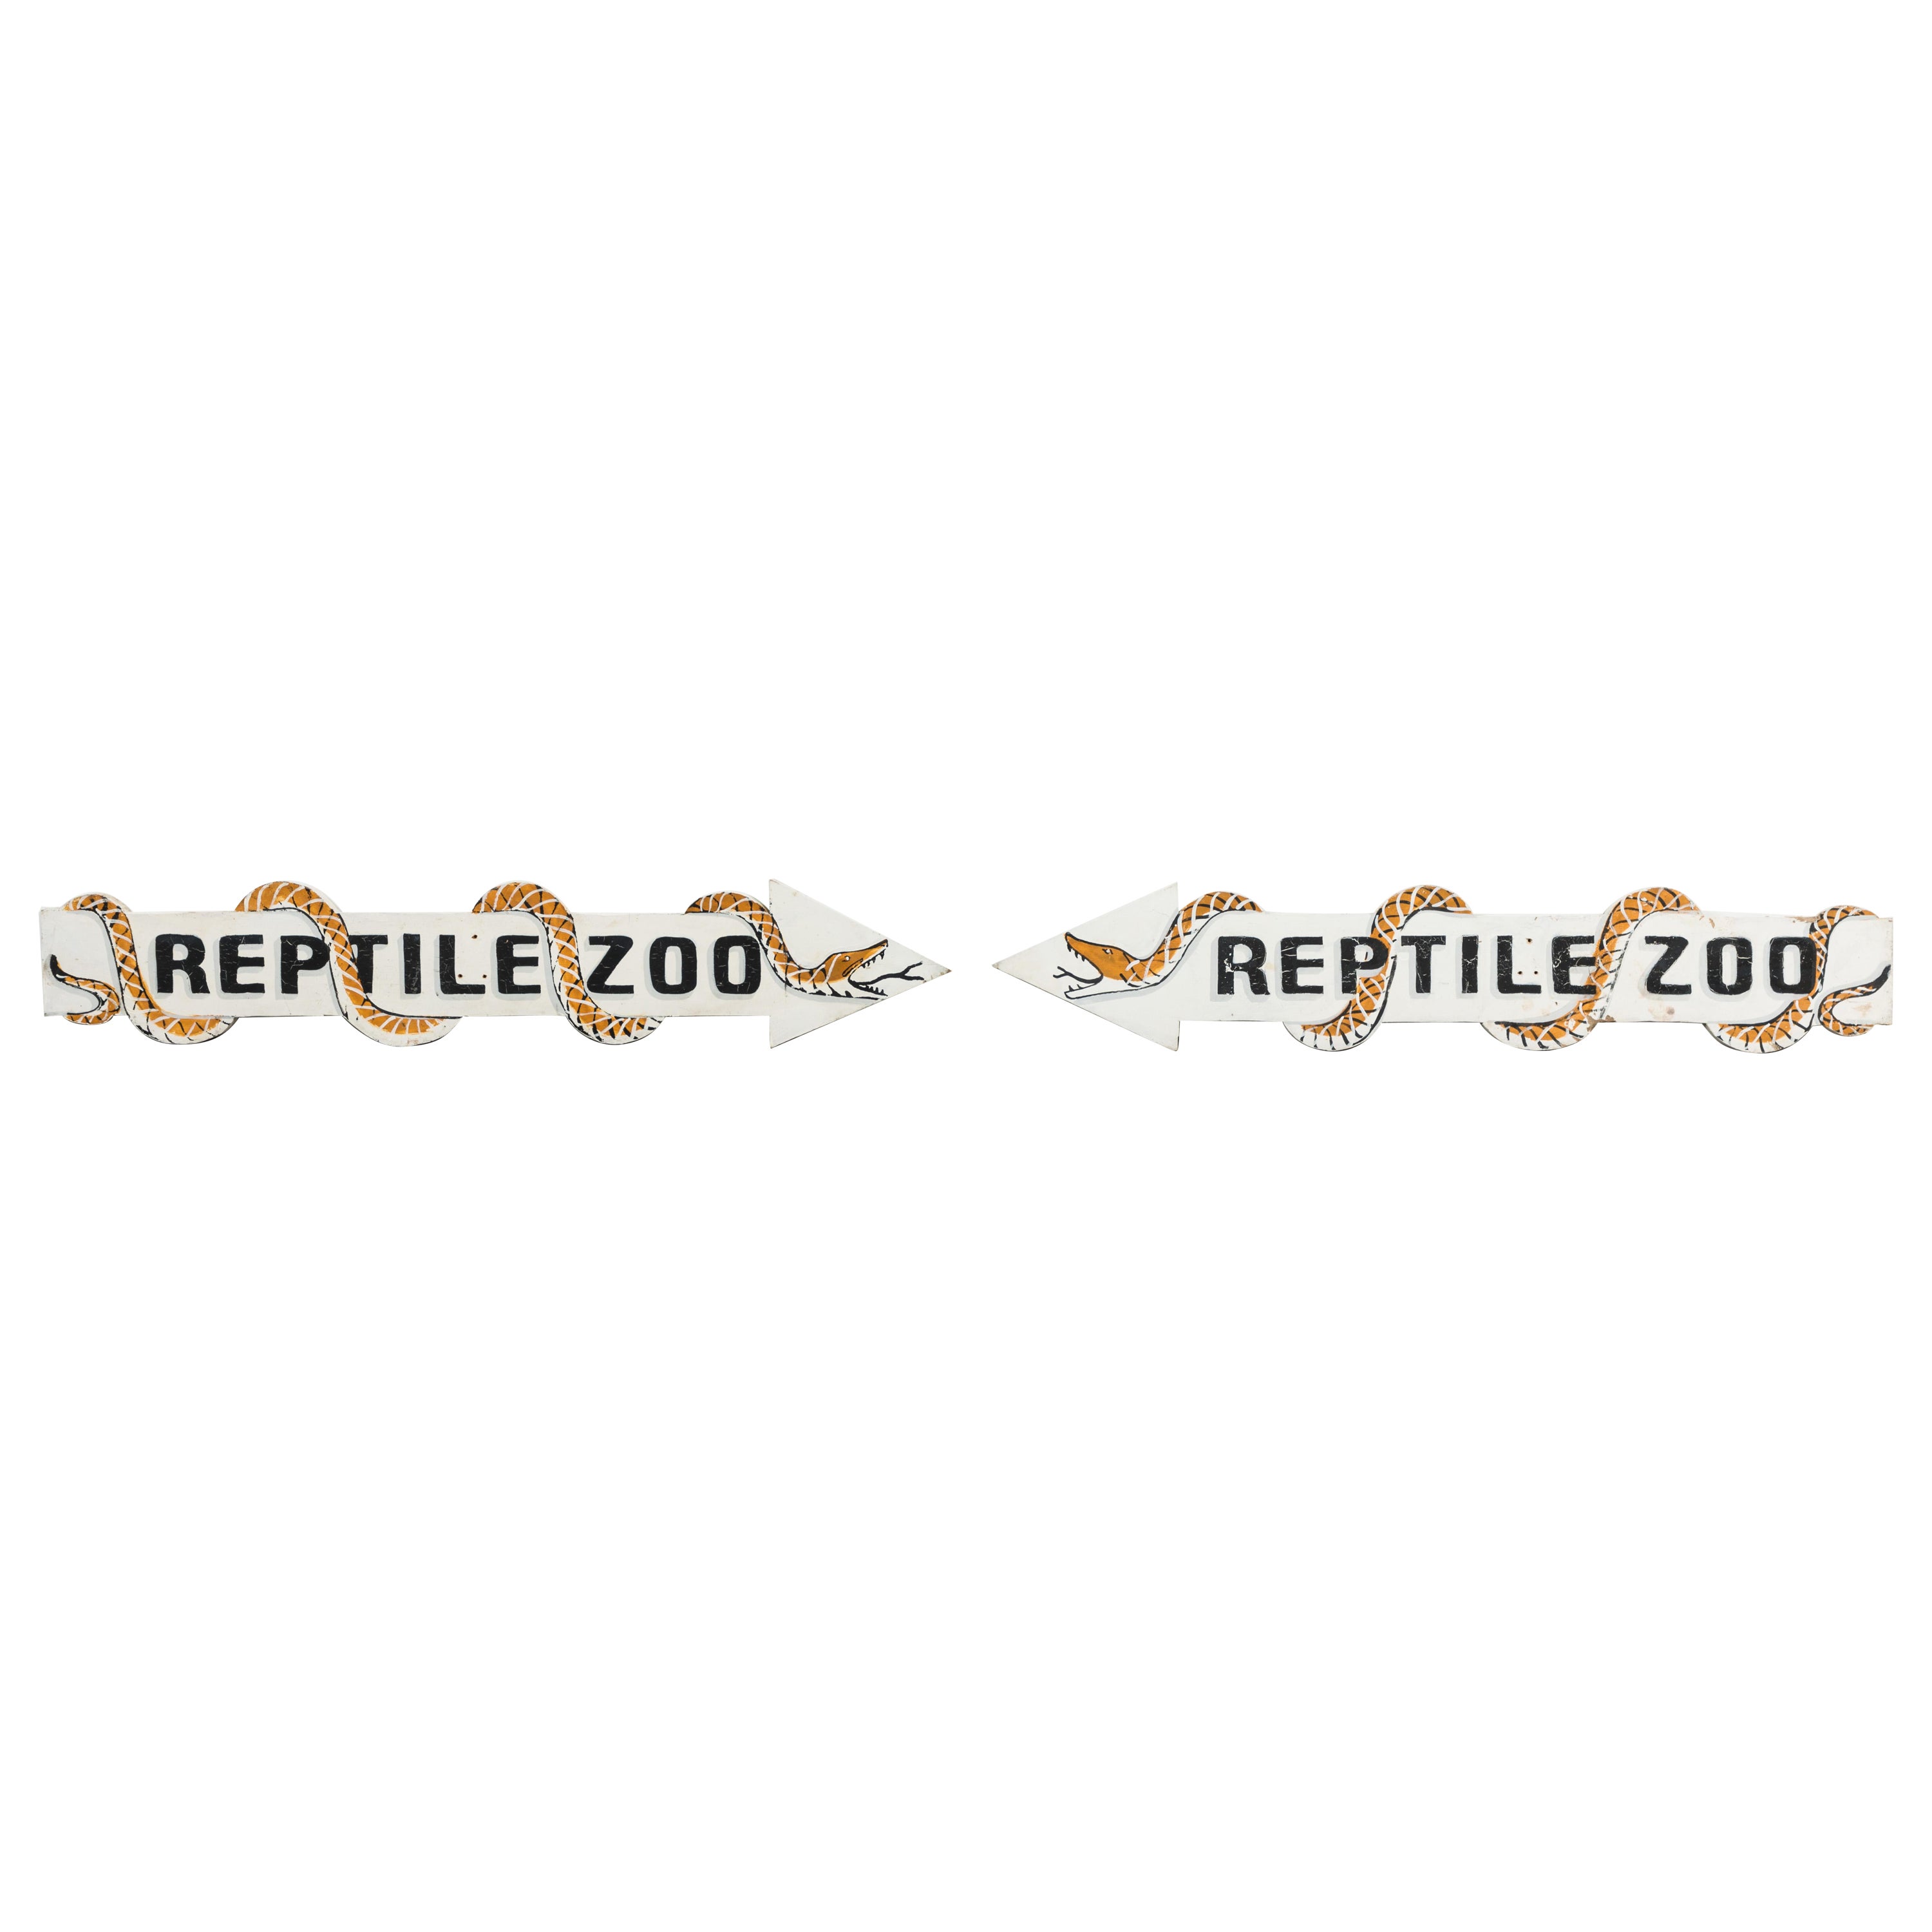 Vintage Pair of Reptile Zoo Snake Signs